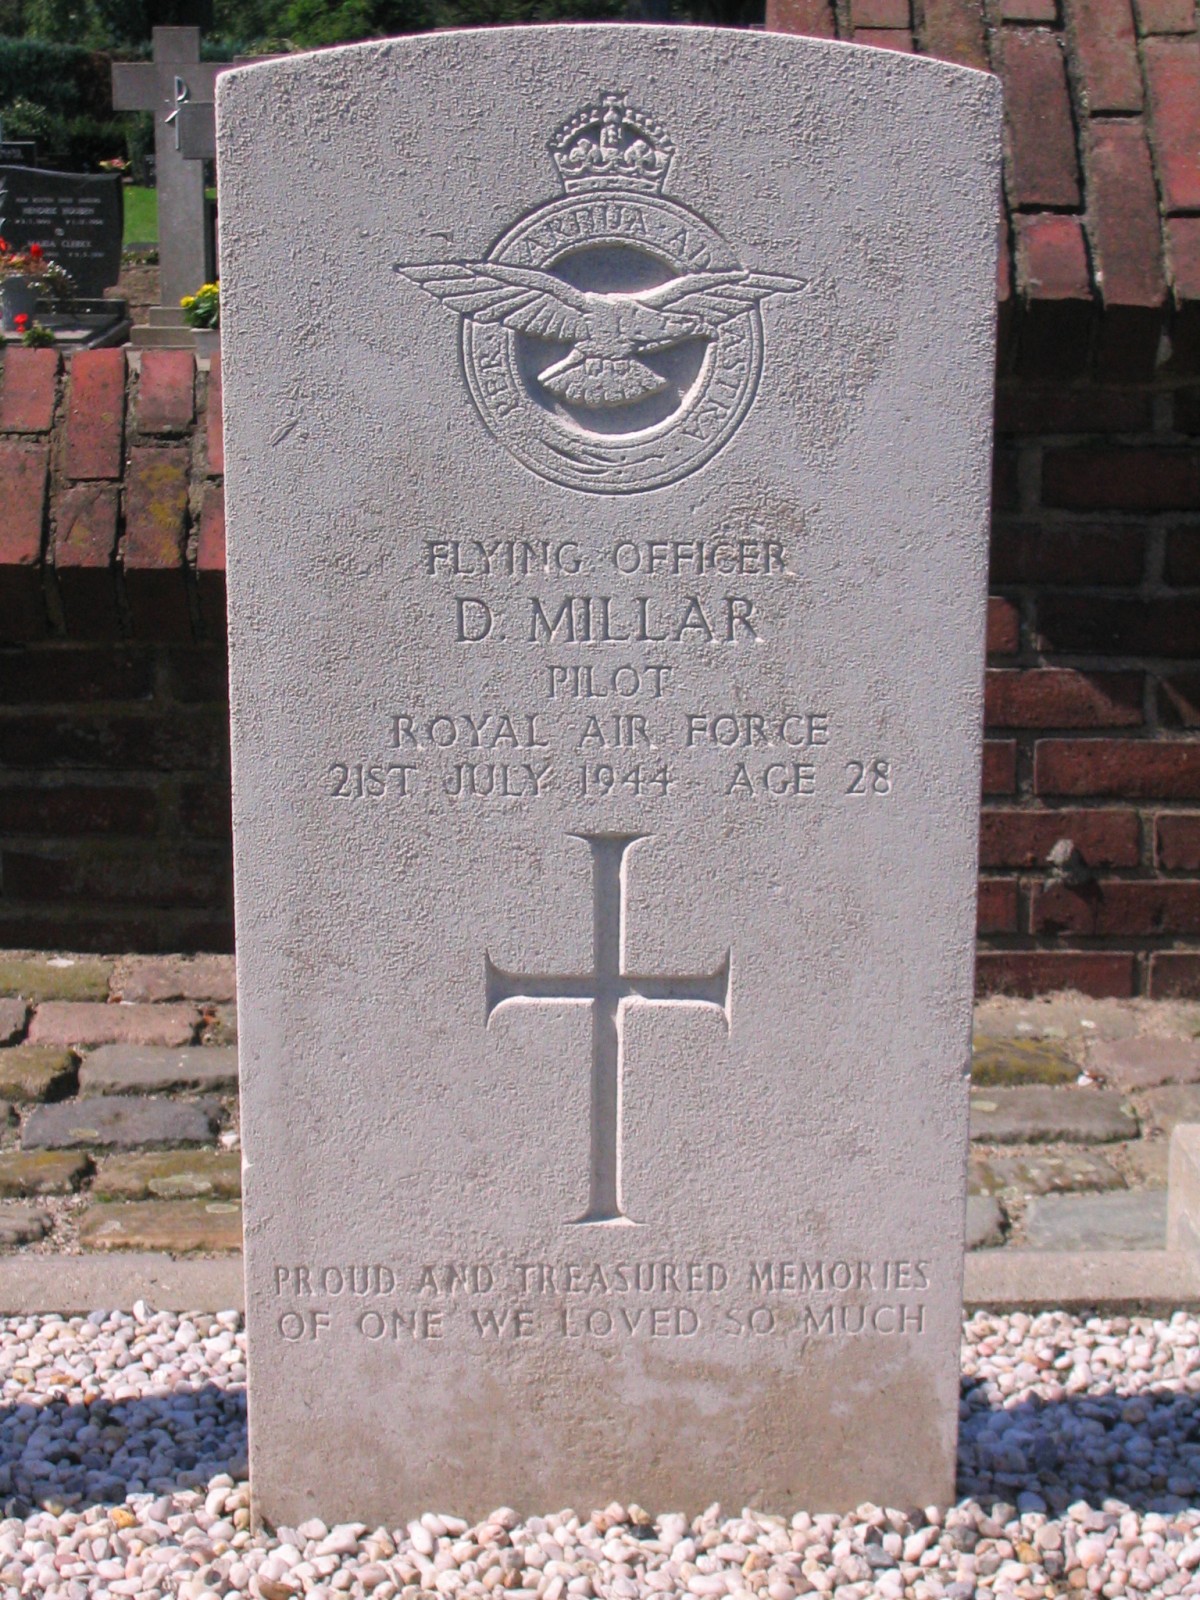 Douglas Millar